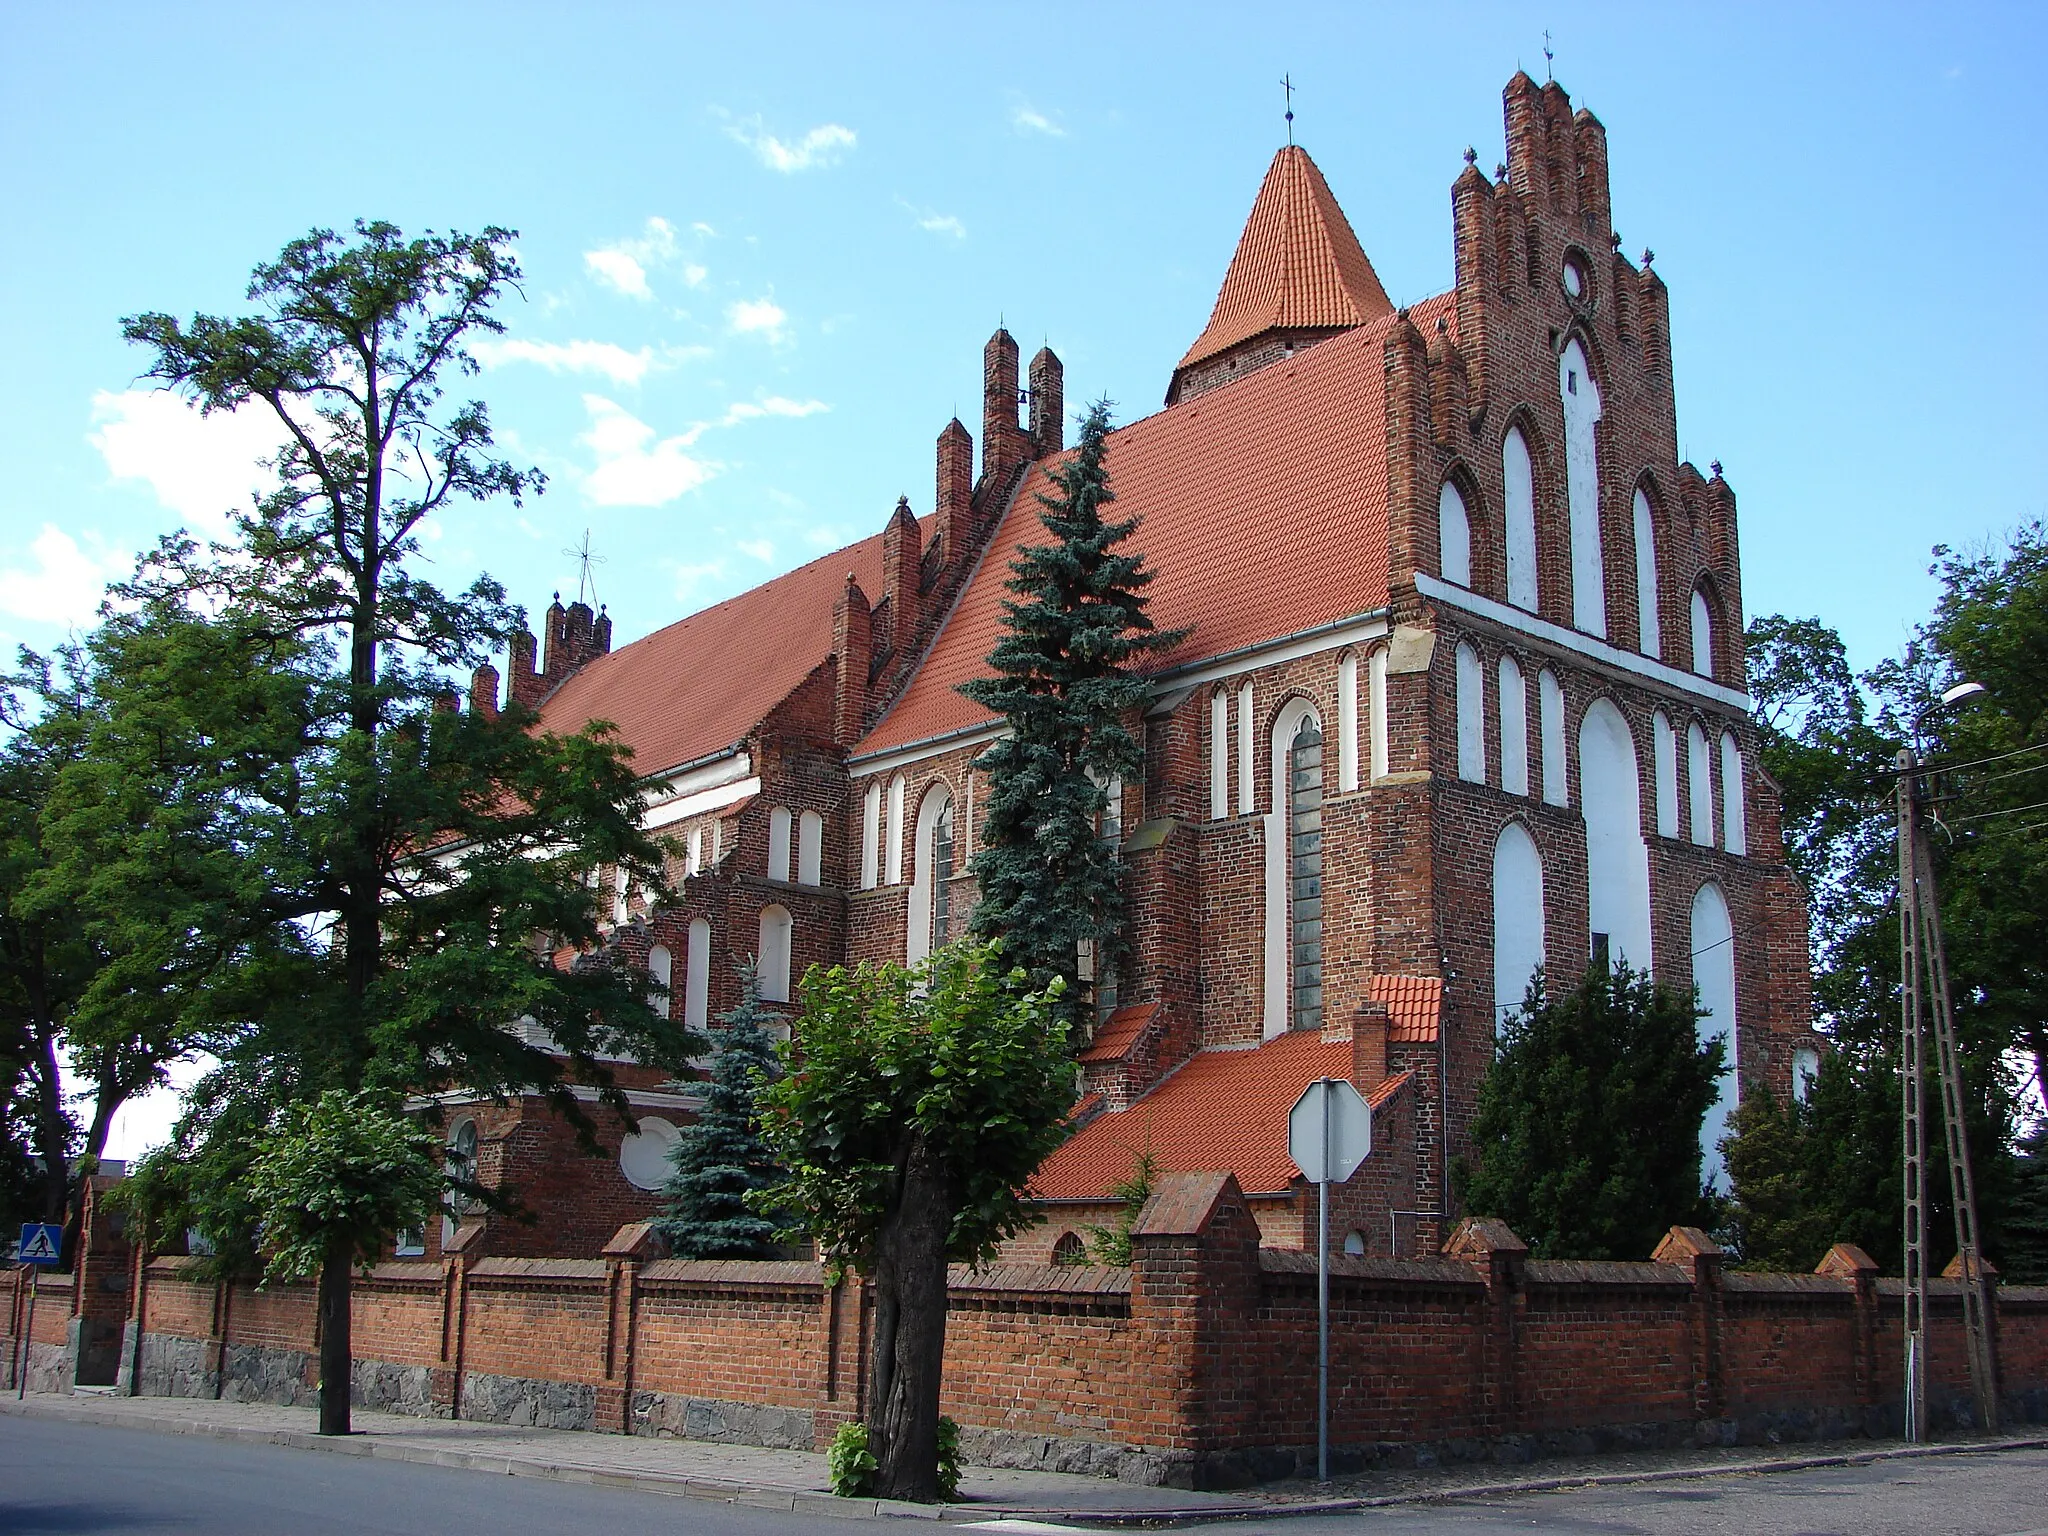 Image of Kujawsko-pomorskie